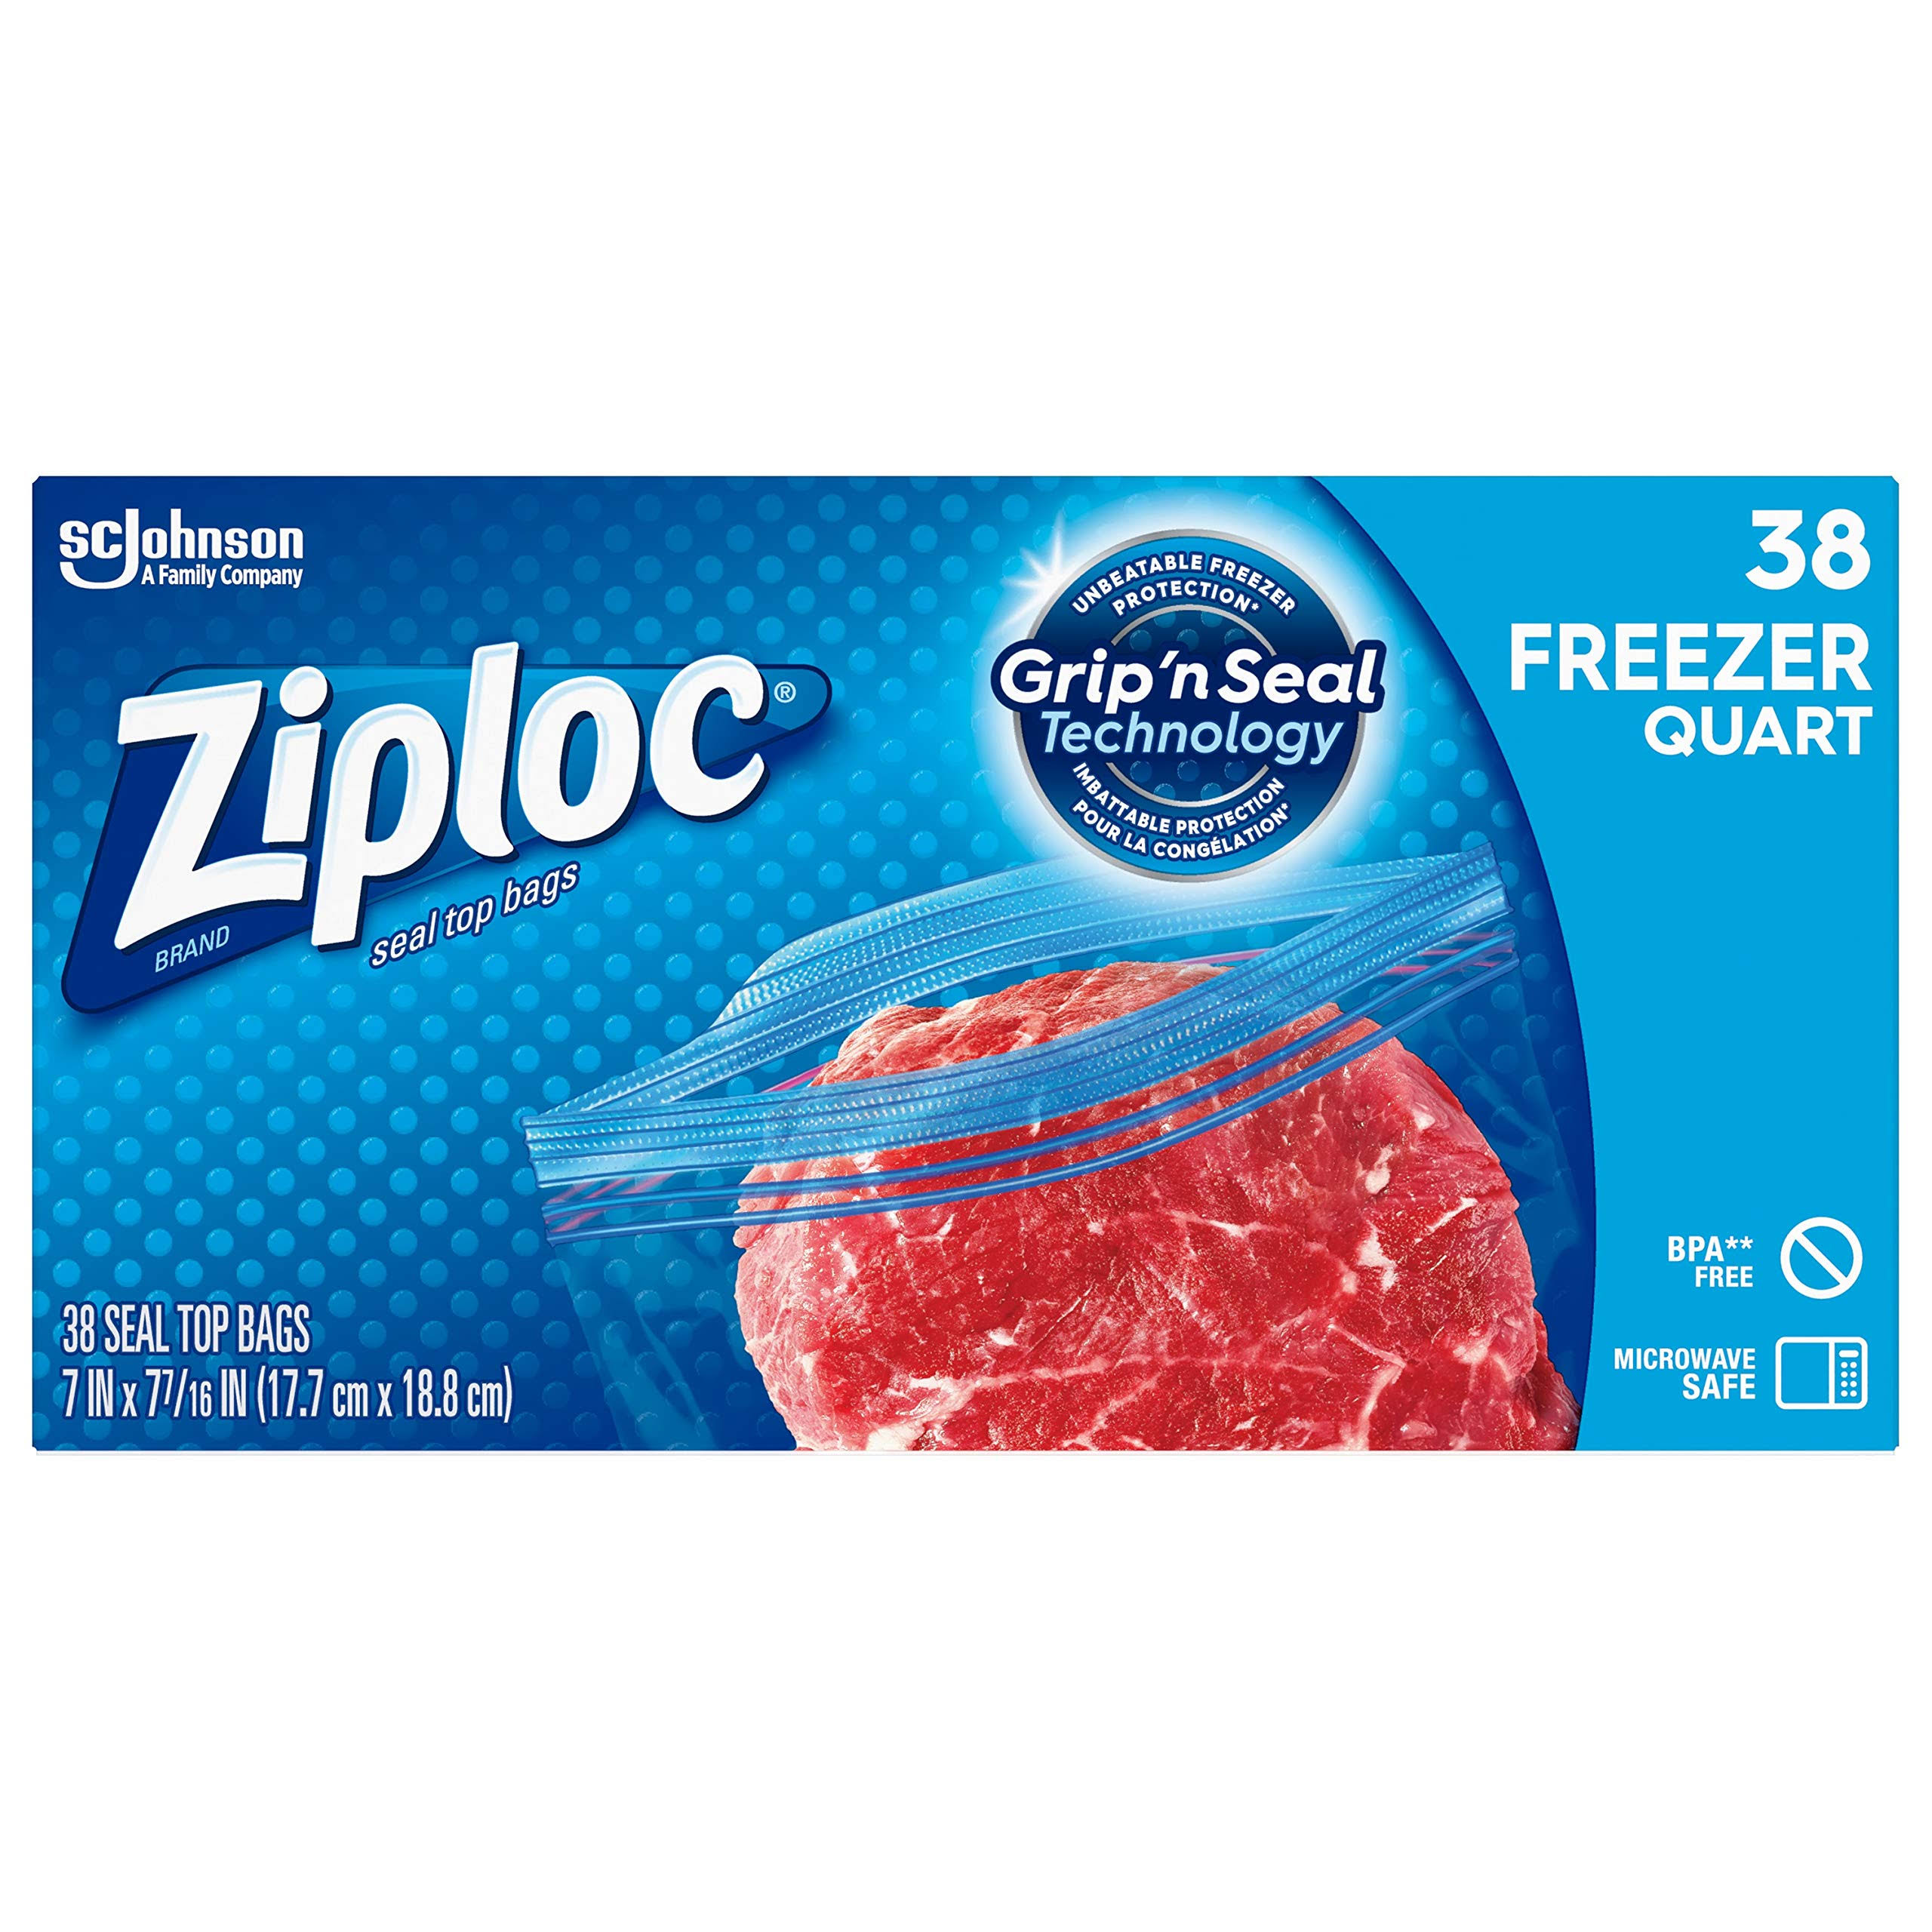 SC Johnson Ziploc Double Zipper Freezer Quart Bags